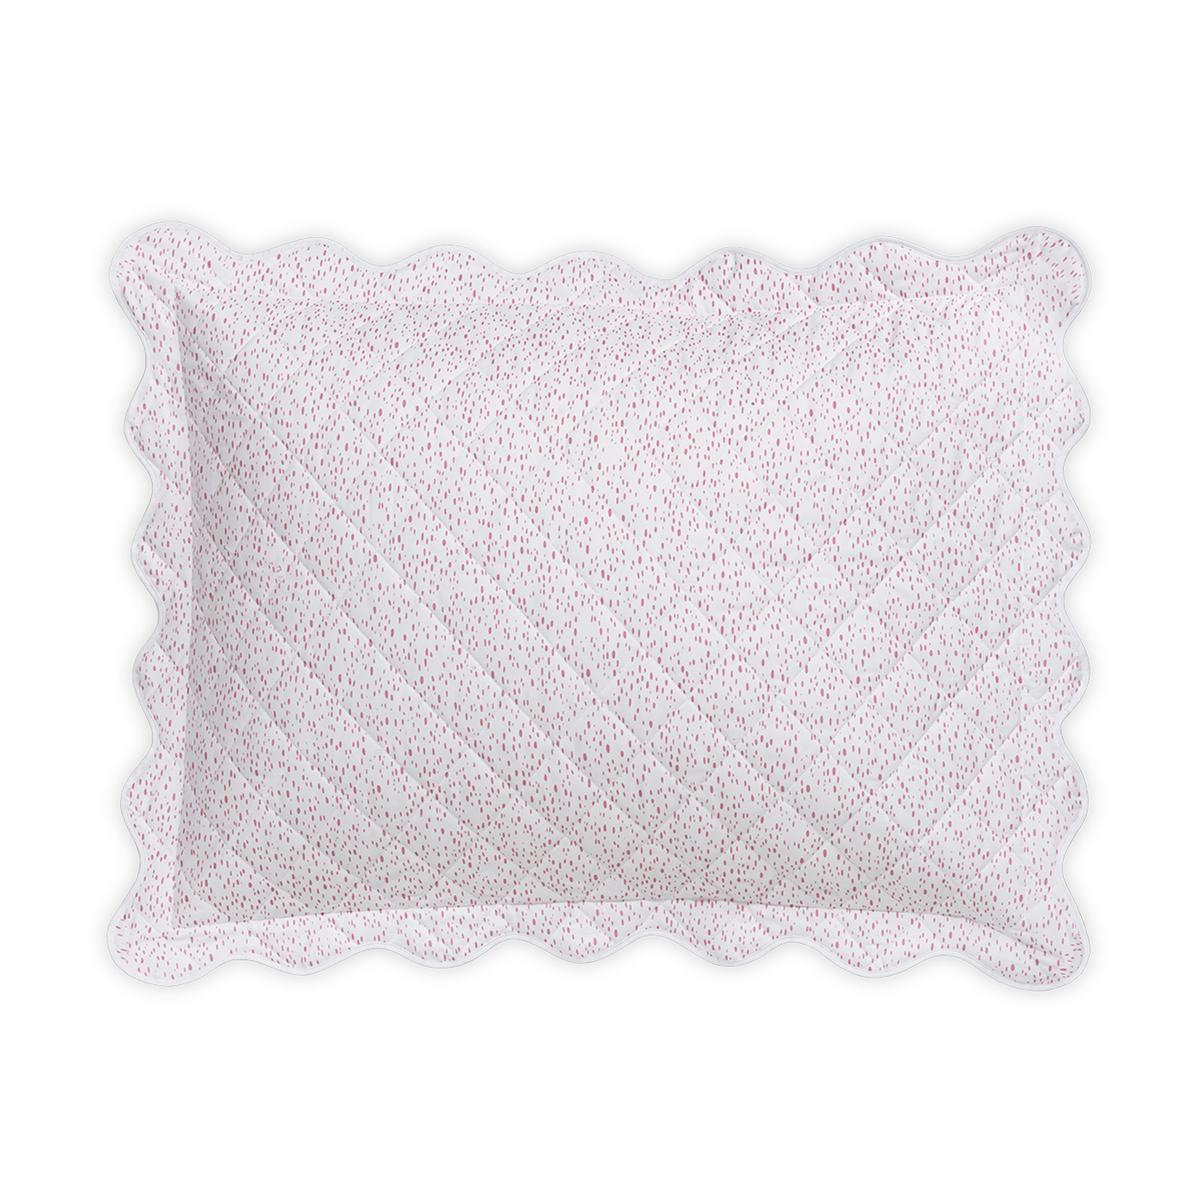 Quilted Standard Sham of Matouk Celine Bedding in Pink Color